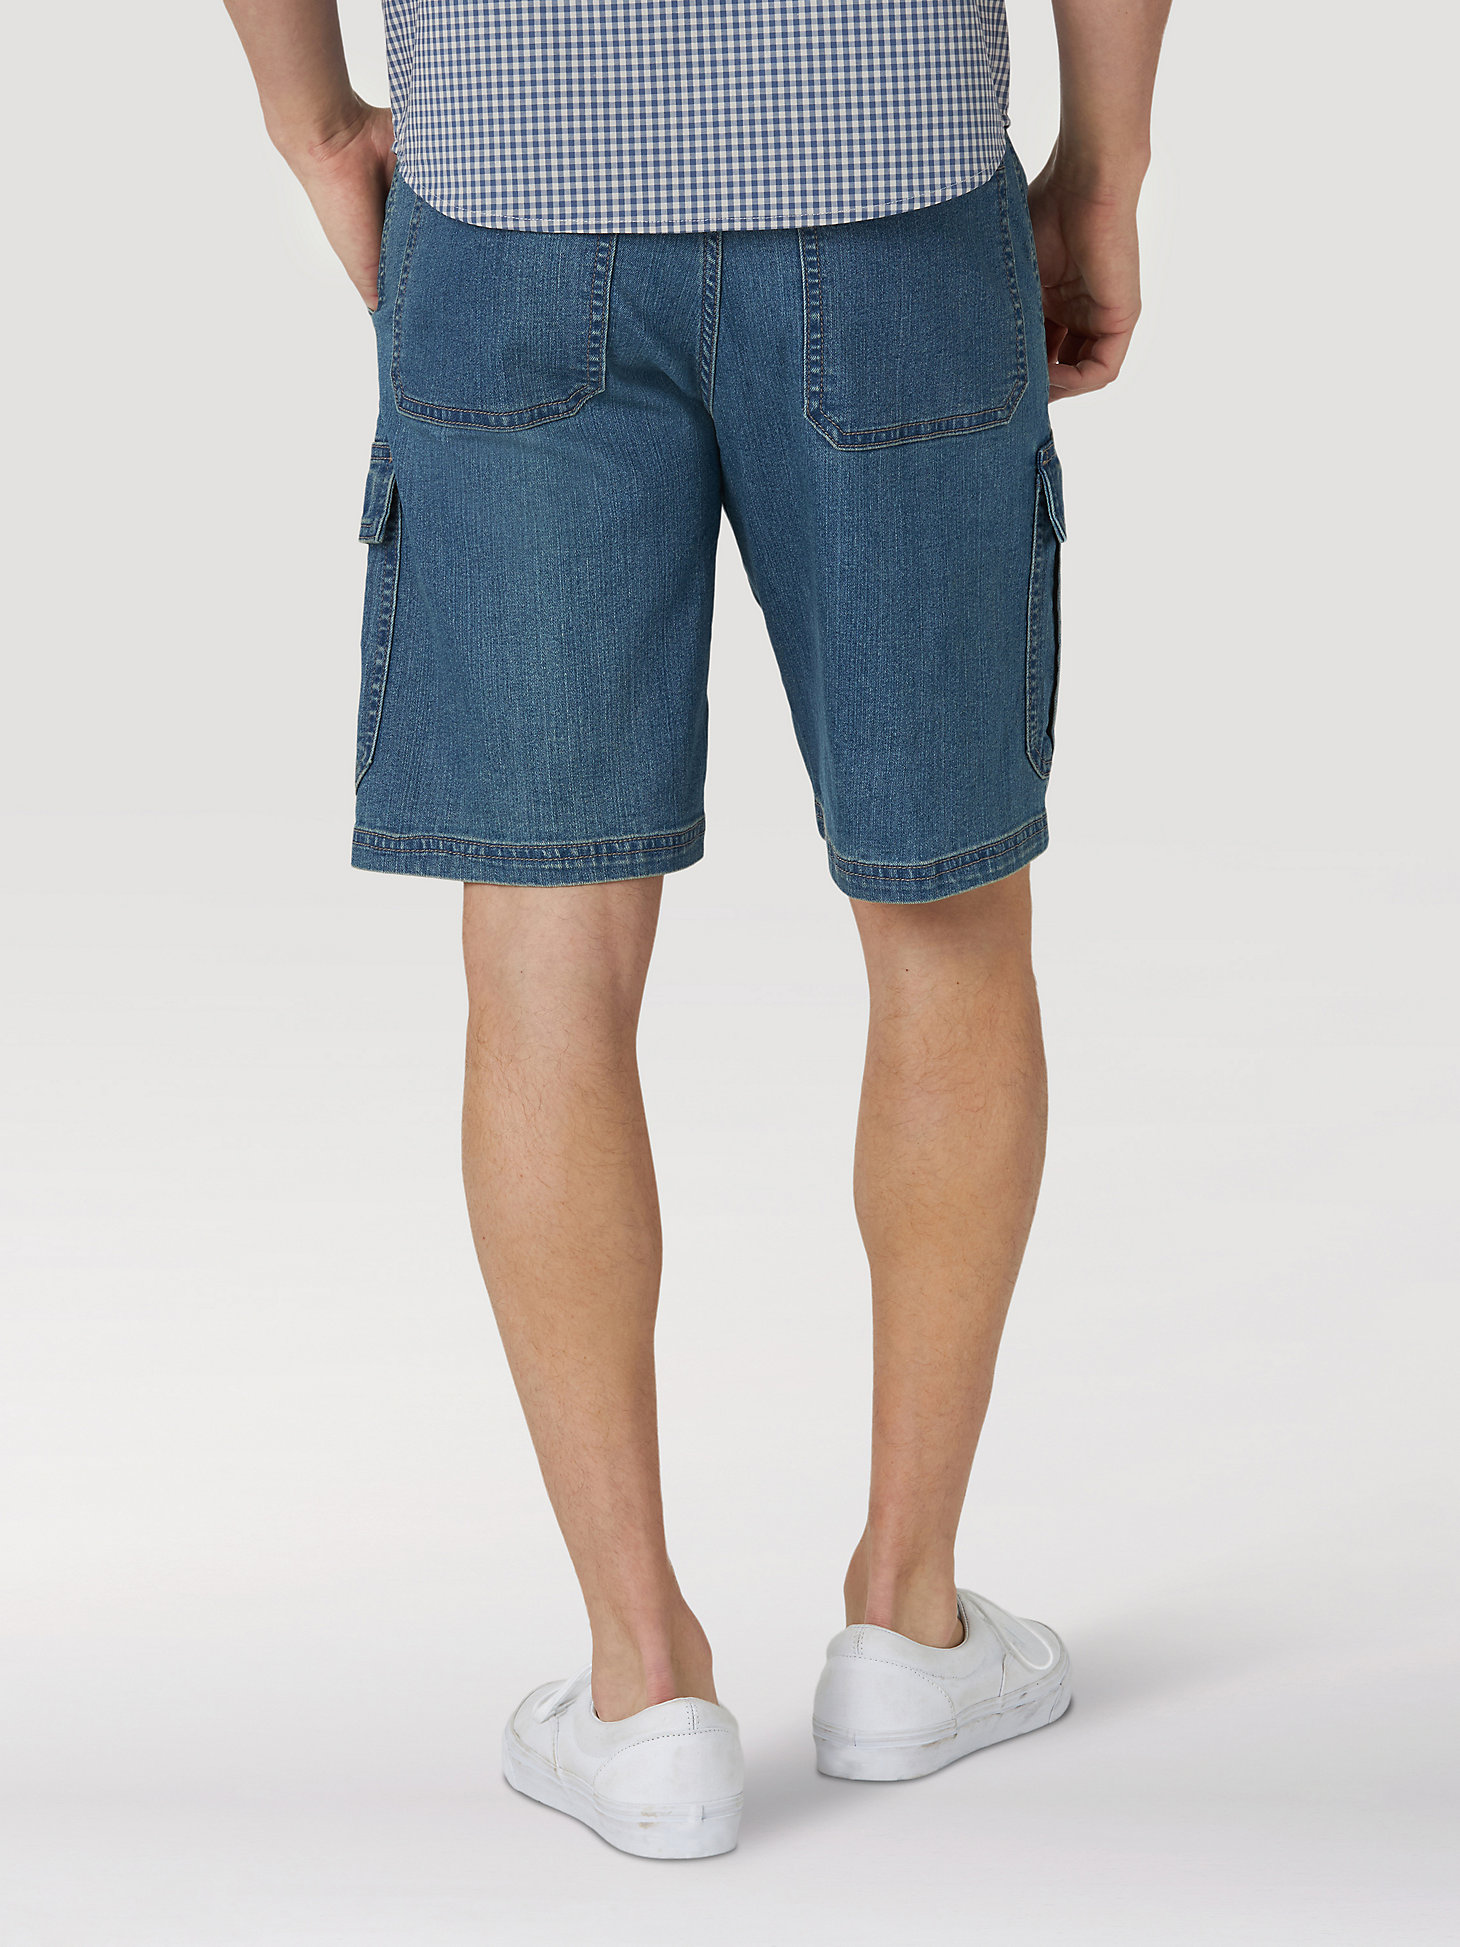 Wrangler® Men's Five Star Premium Denim Cargo Shorts in Medium Tint alternative view 1